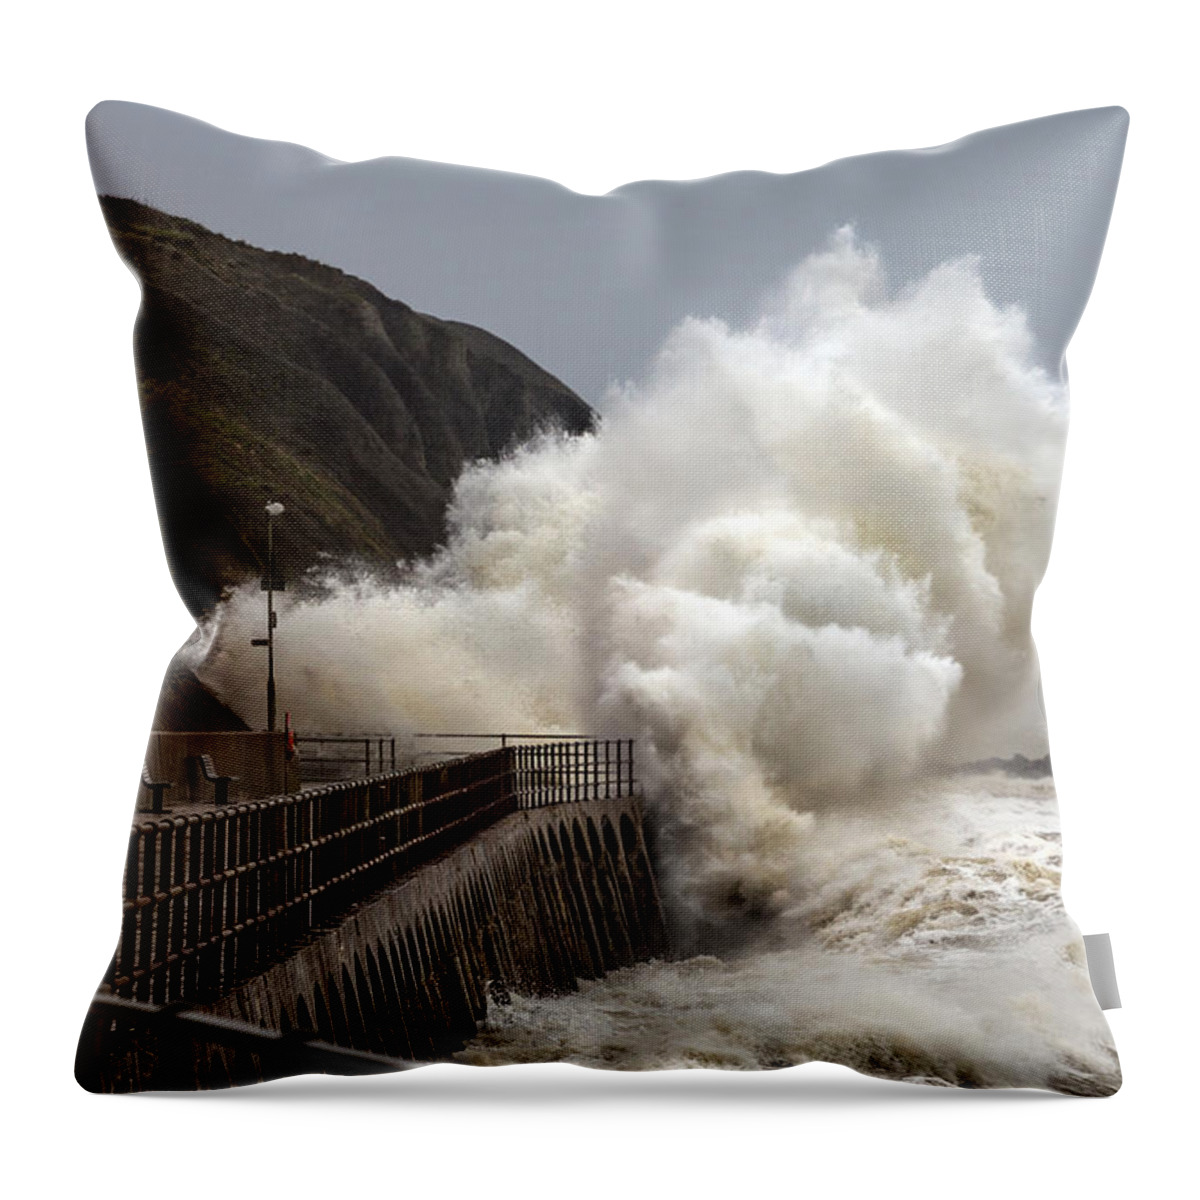 Folkestone Throw Pillow featuring the photograph Stormy Folkestone by Ian Hufton